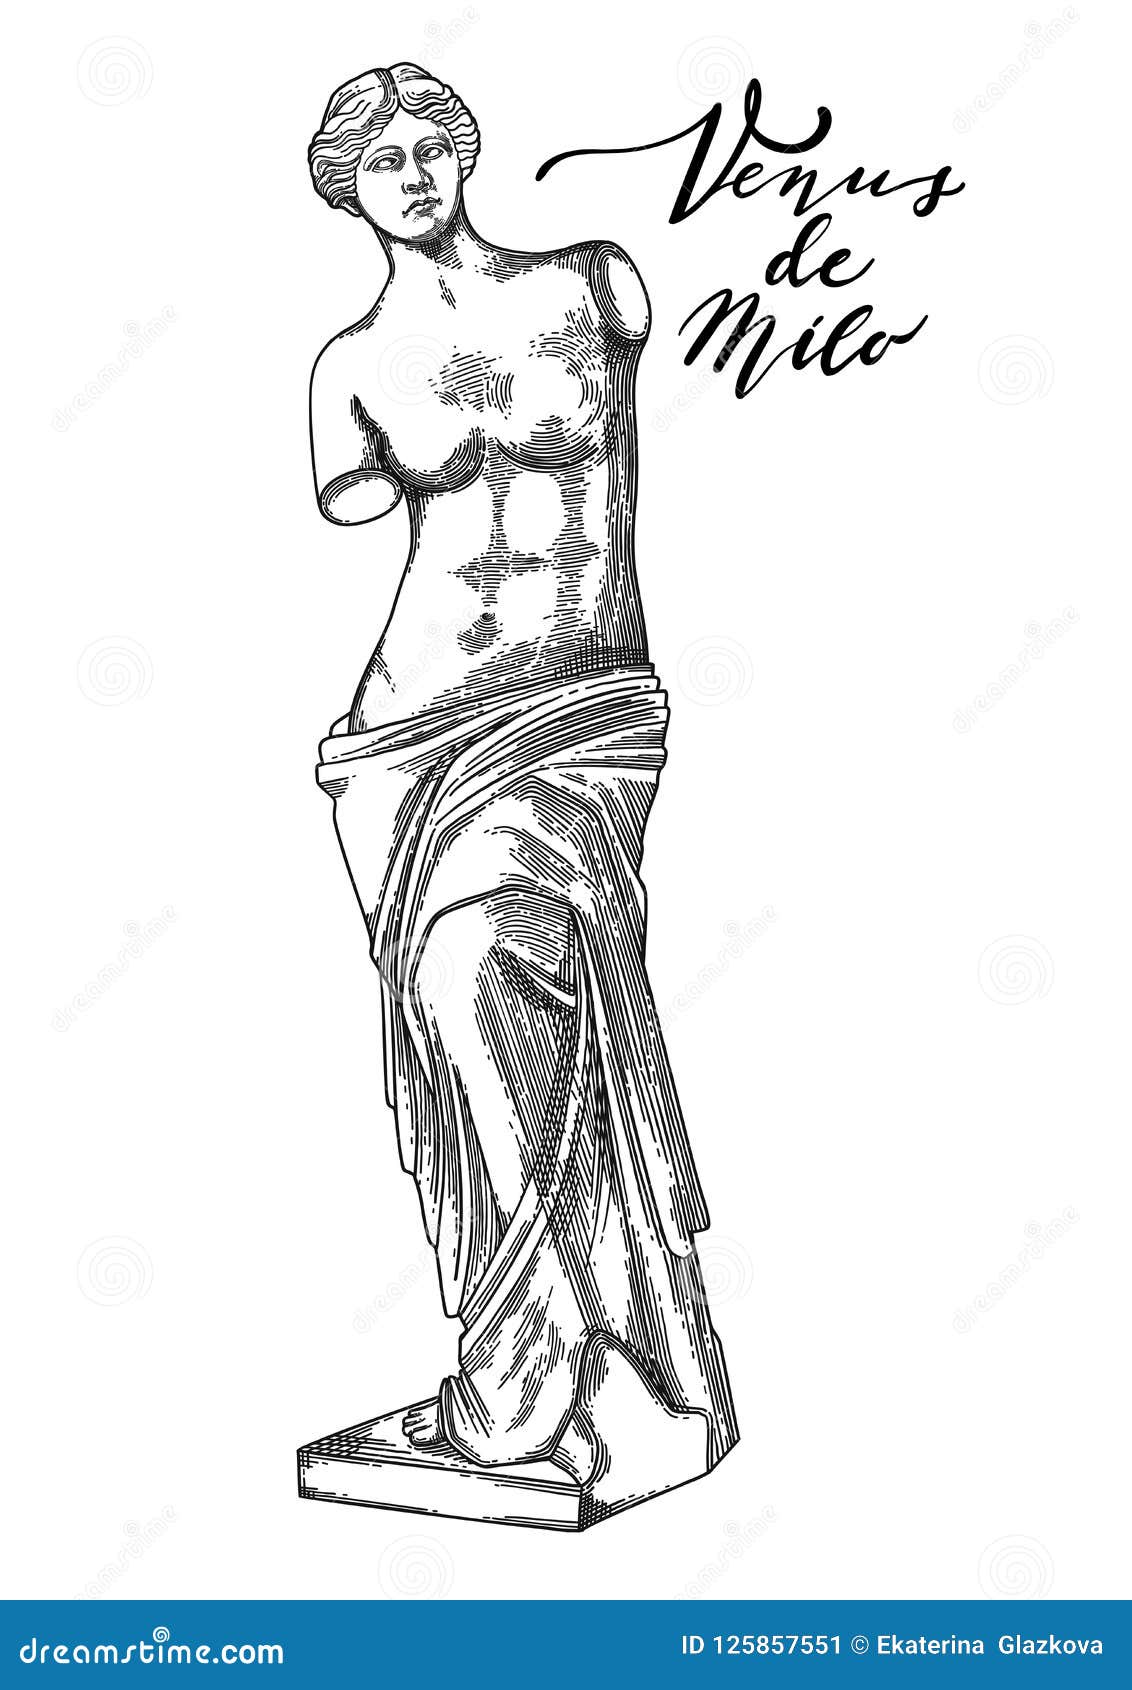 Venus de milo sculpture drawn in engraving technique stock vector